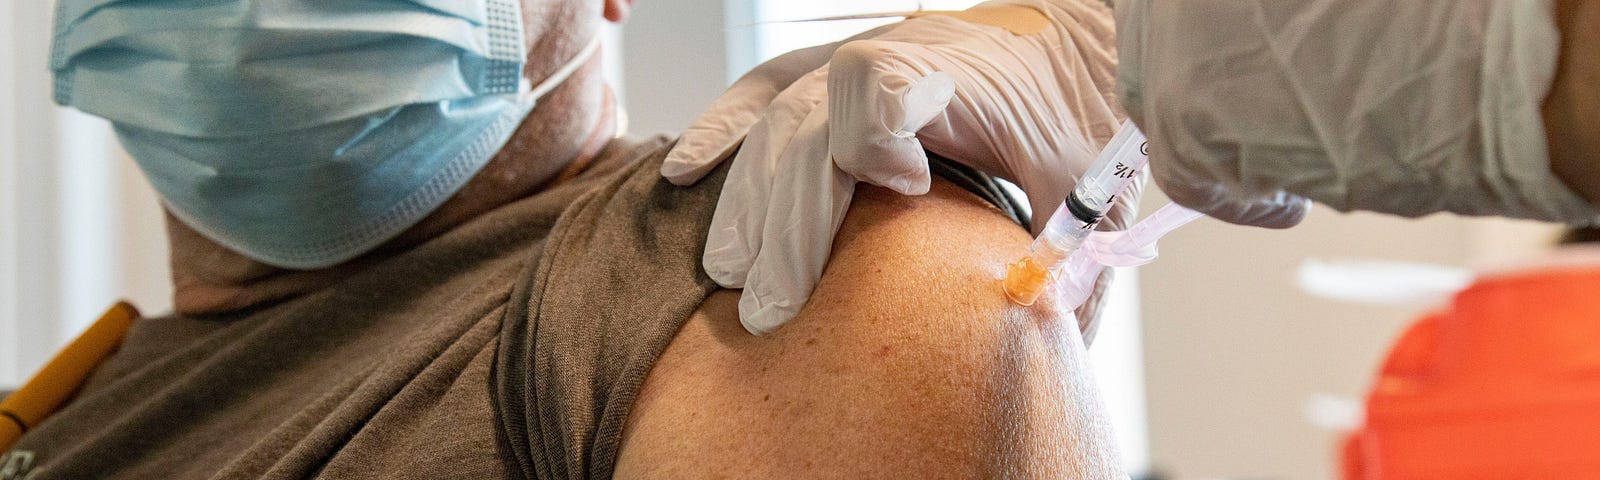 A person receives the COVID-19 vaccine.